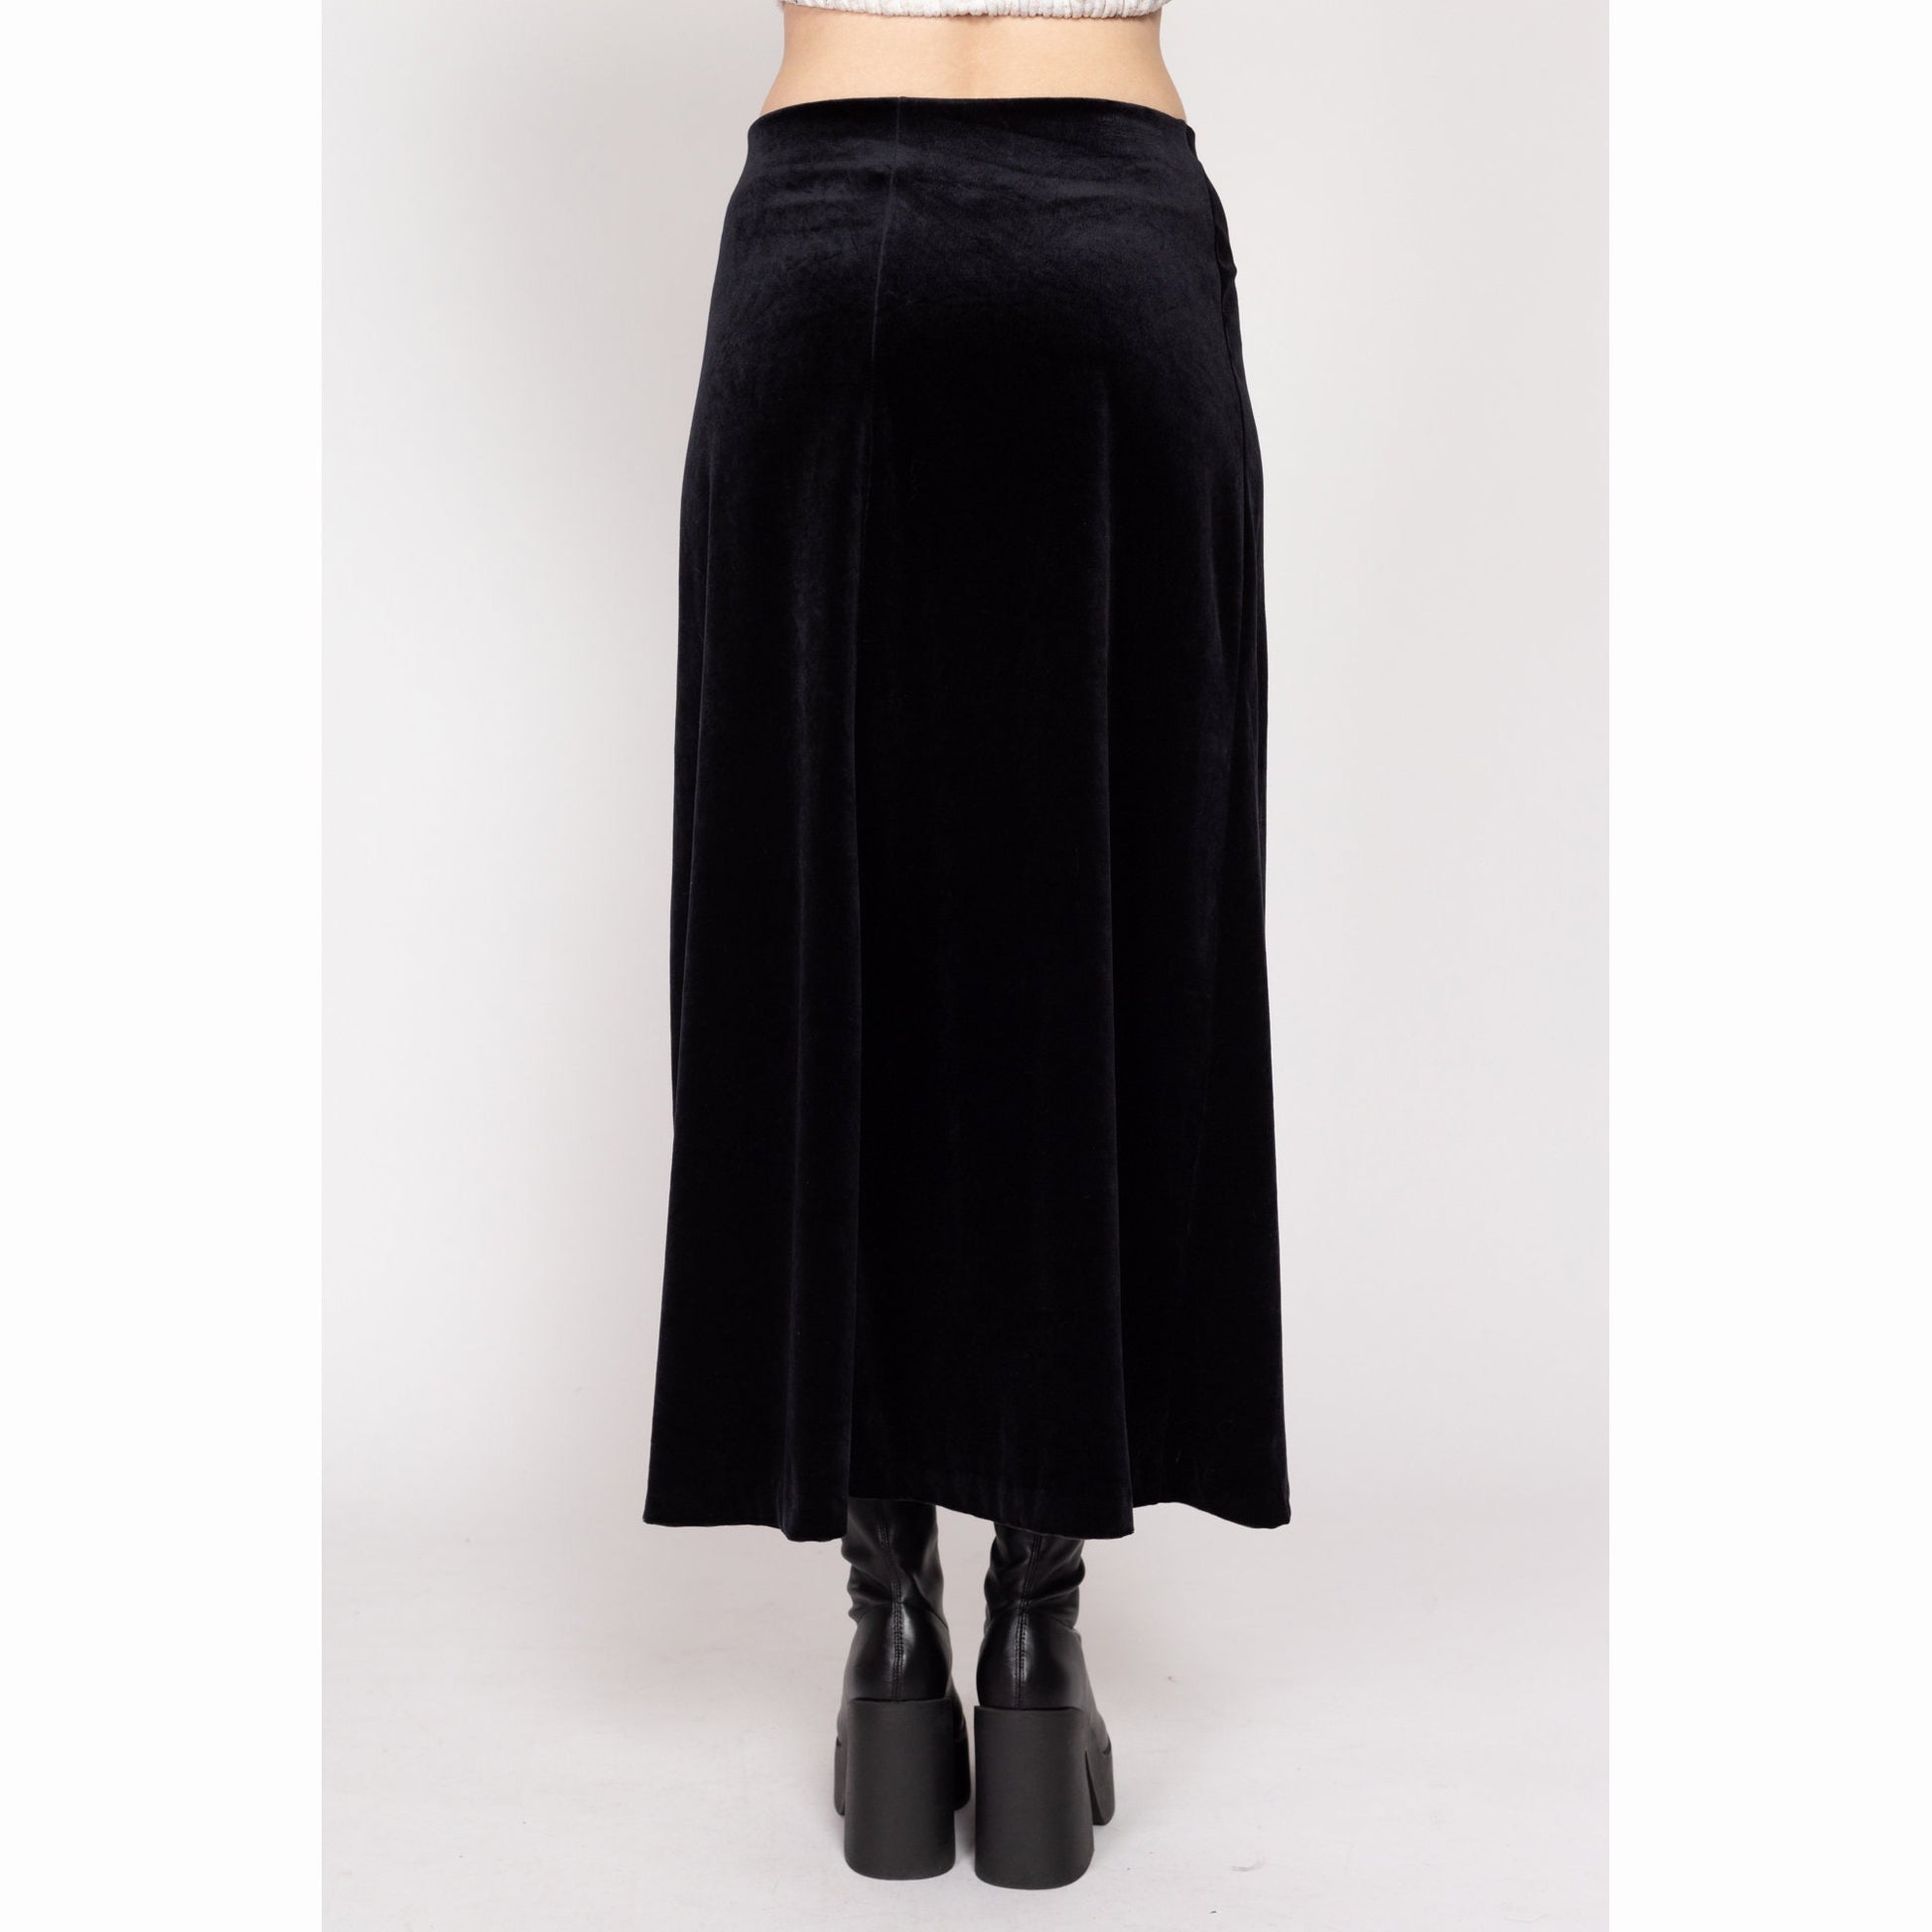 Medium 90s Minimalist Black Velvet Maxi Skirt | Vintage High Waisted Gothic Grunge A Line Skirt